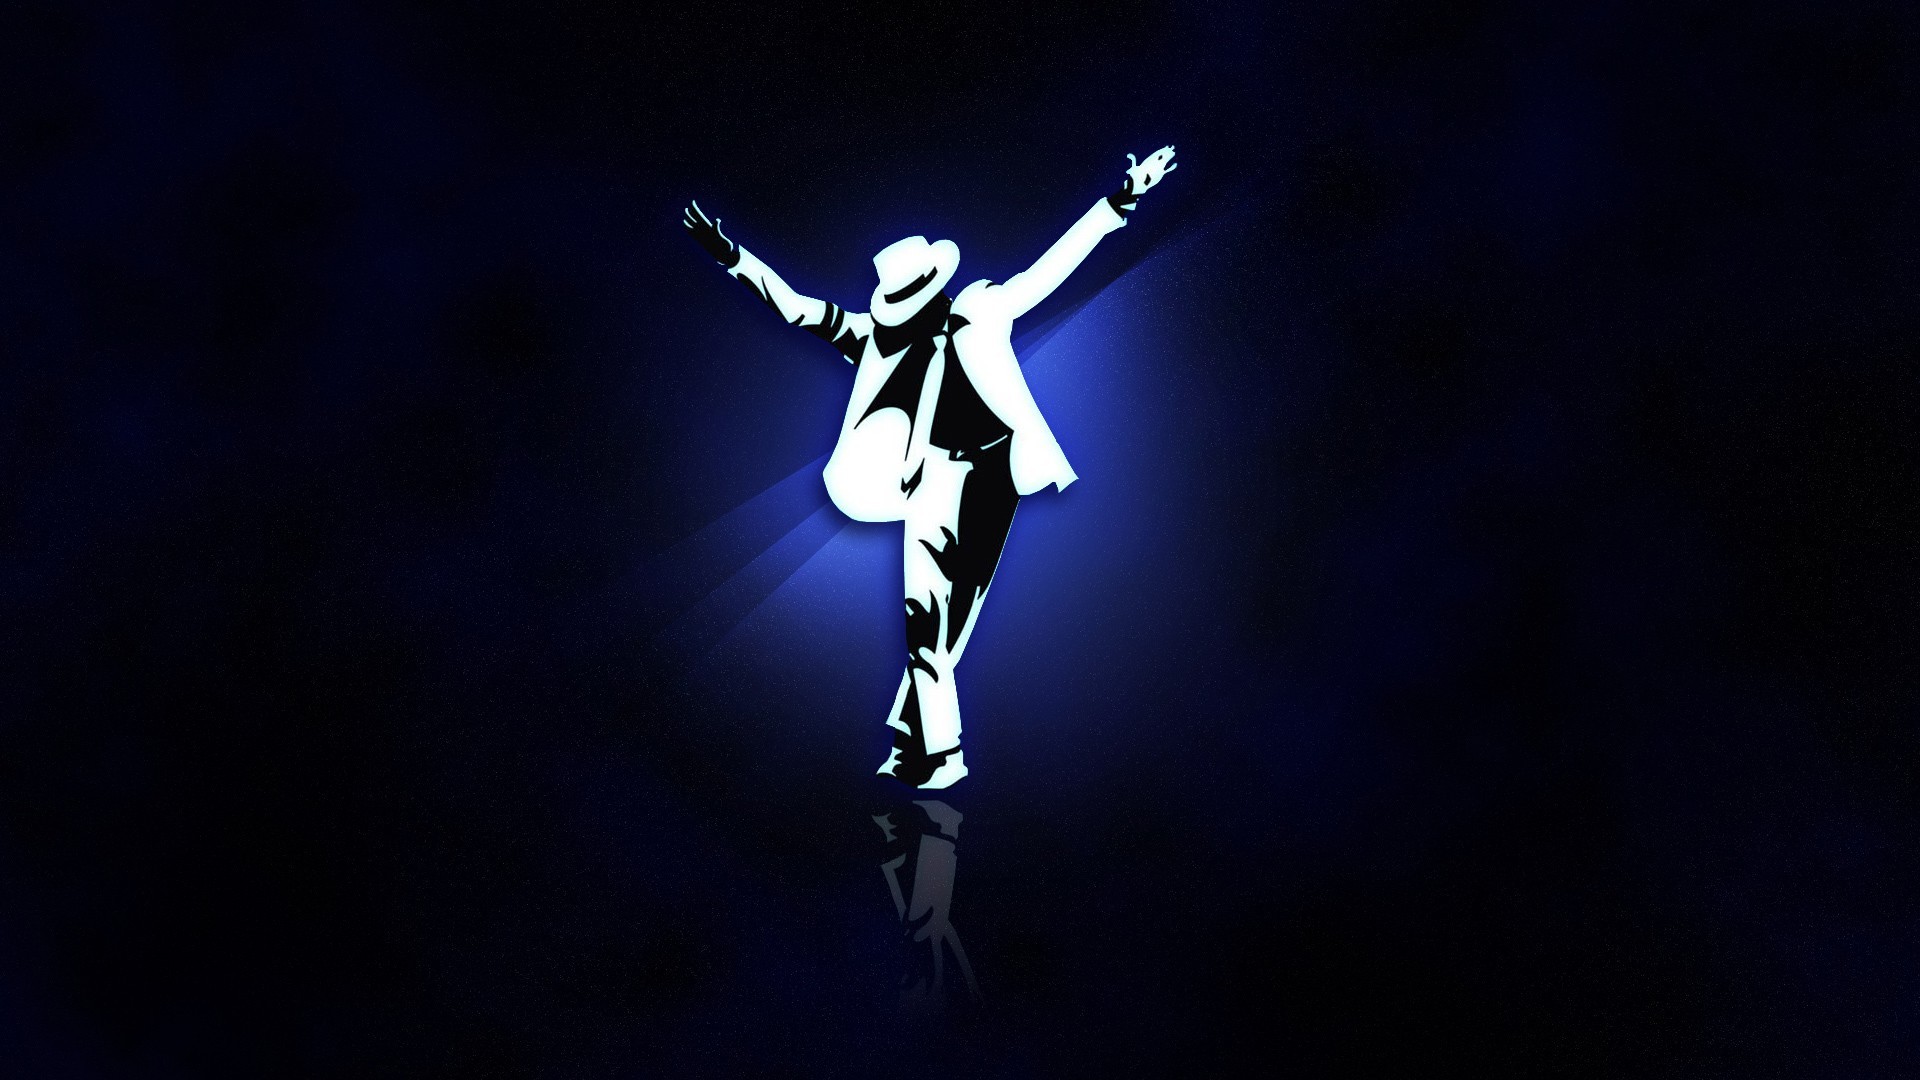 Michael Jackson silhouette wallpaper 4991